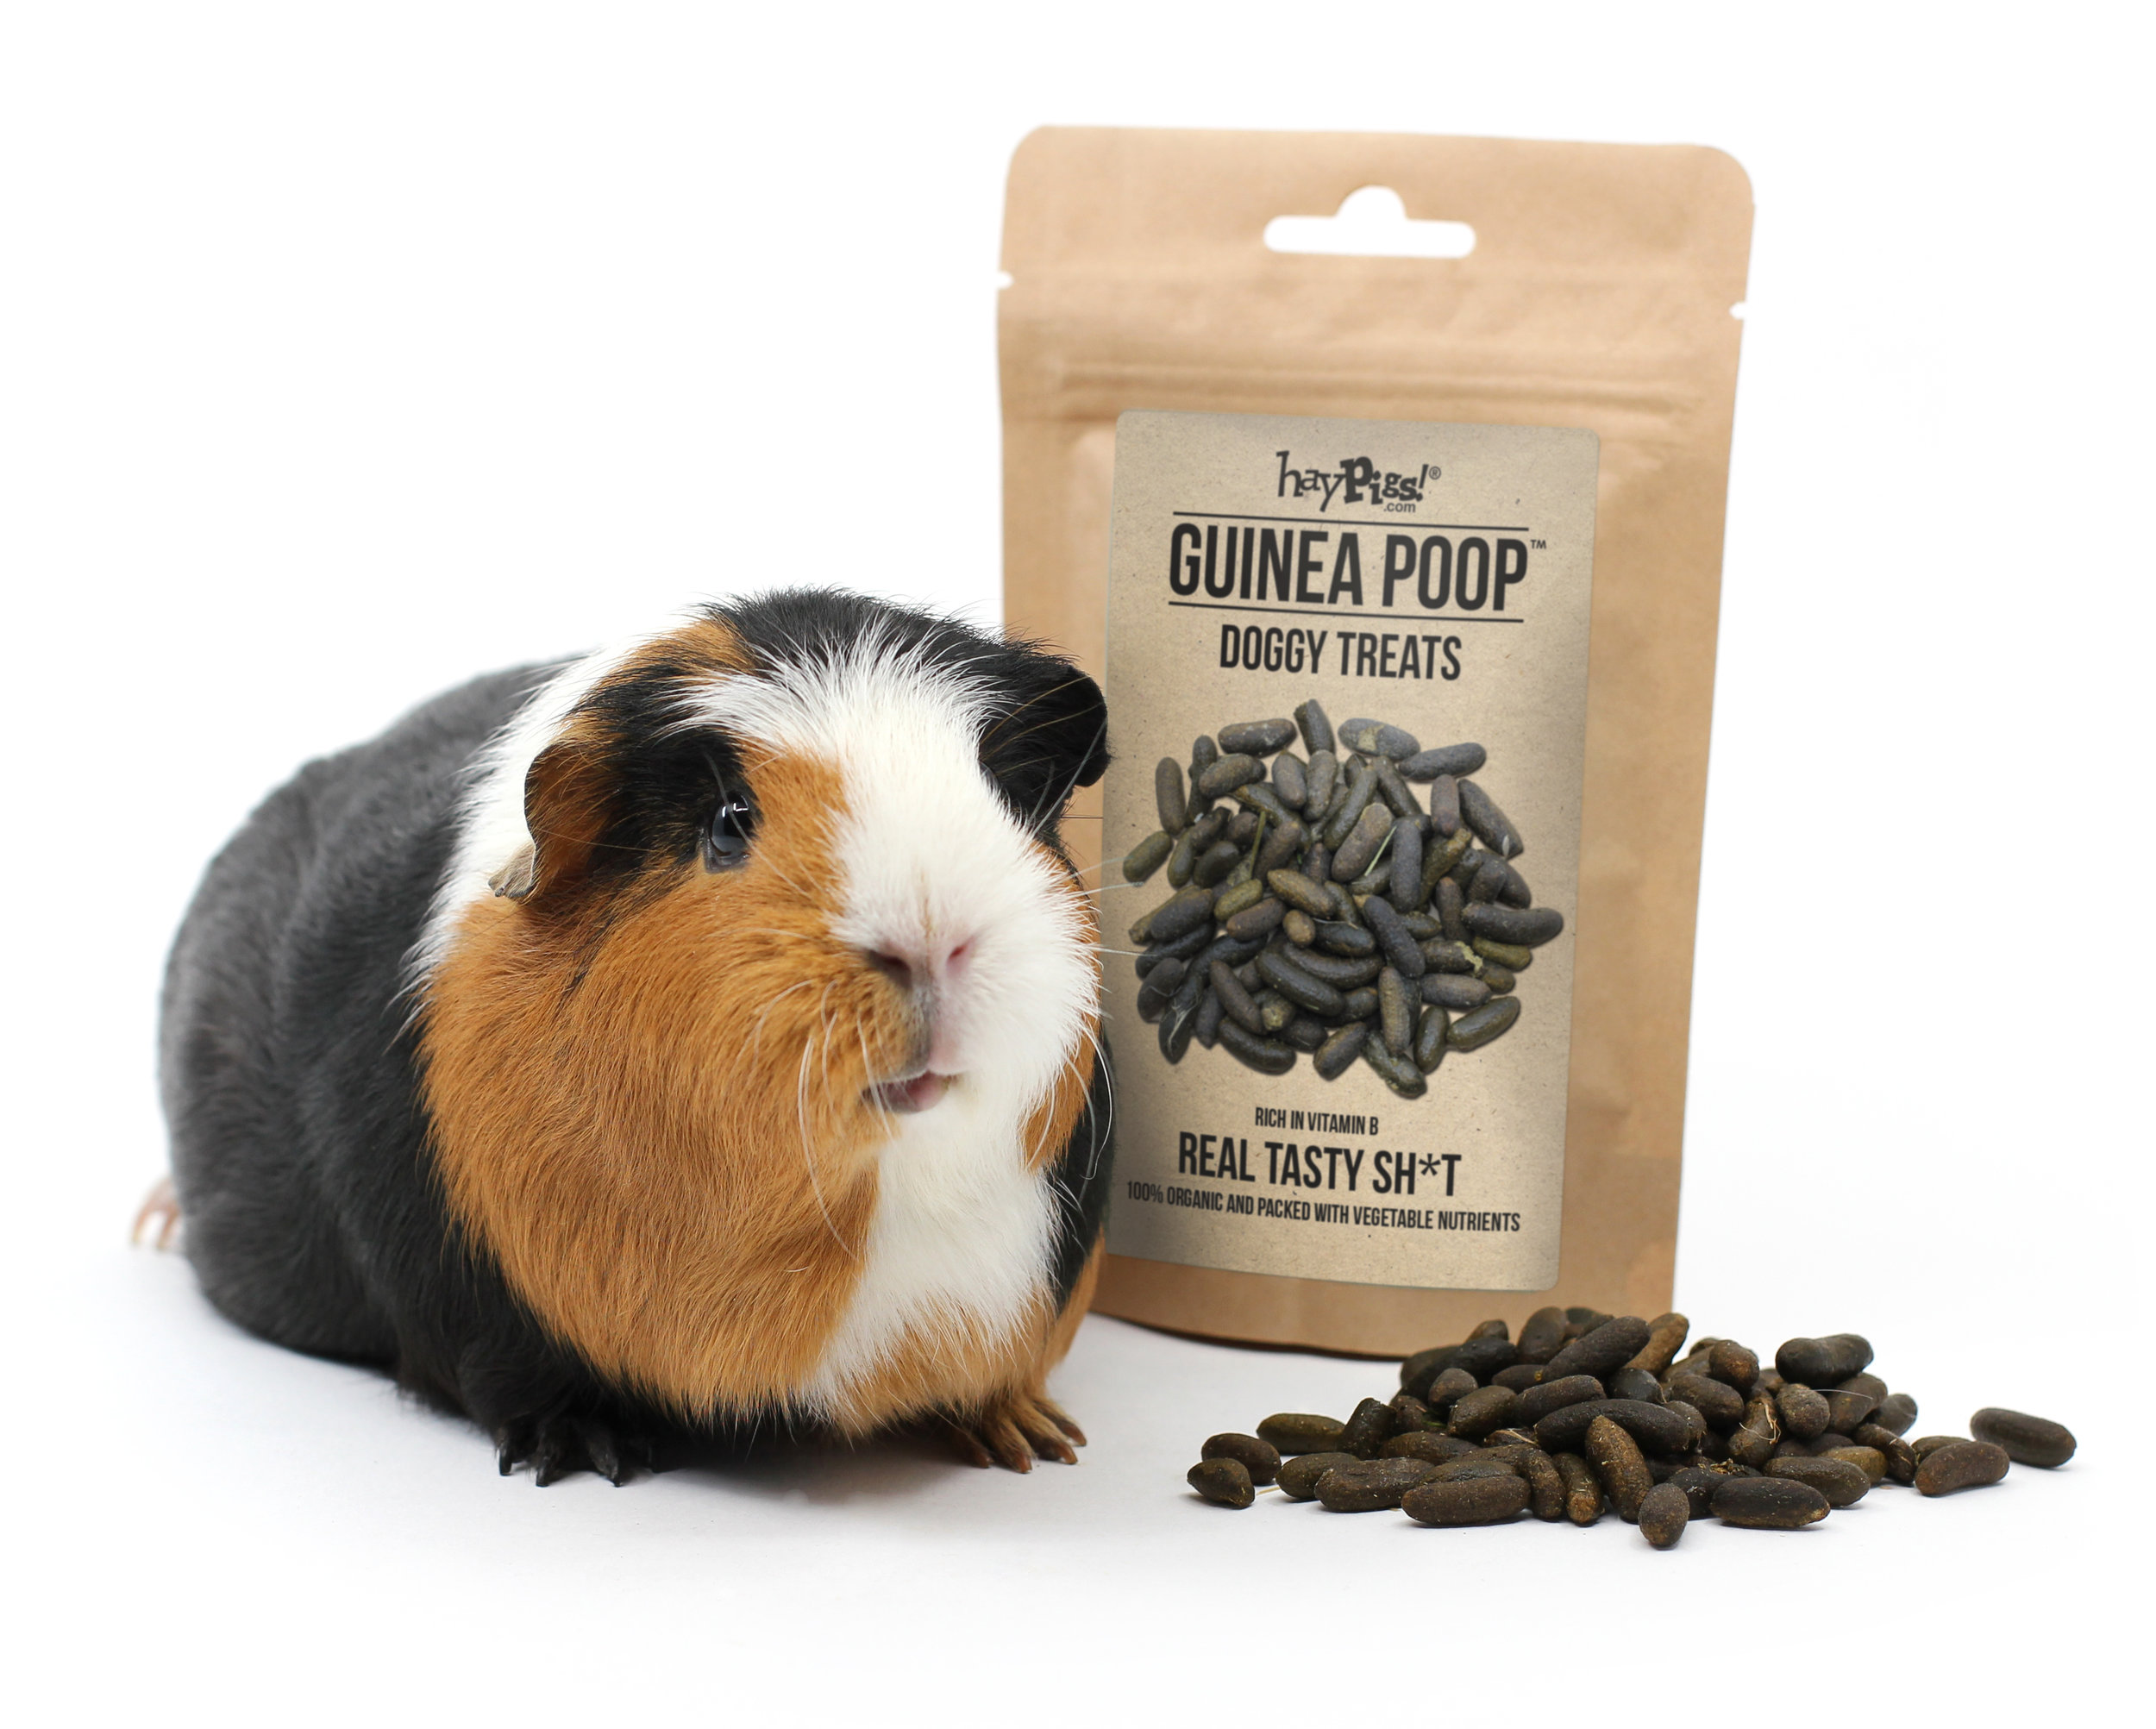 do guinea pigs eat their poop